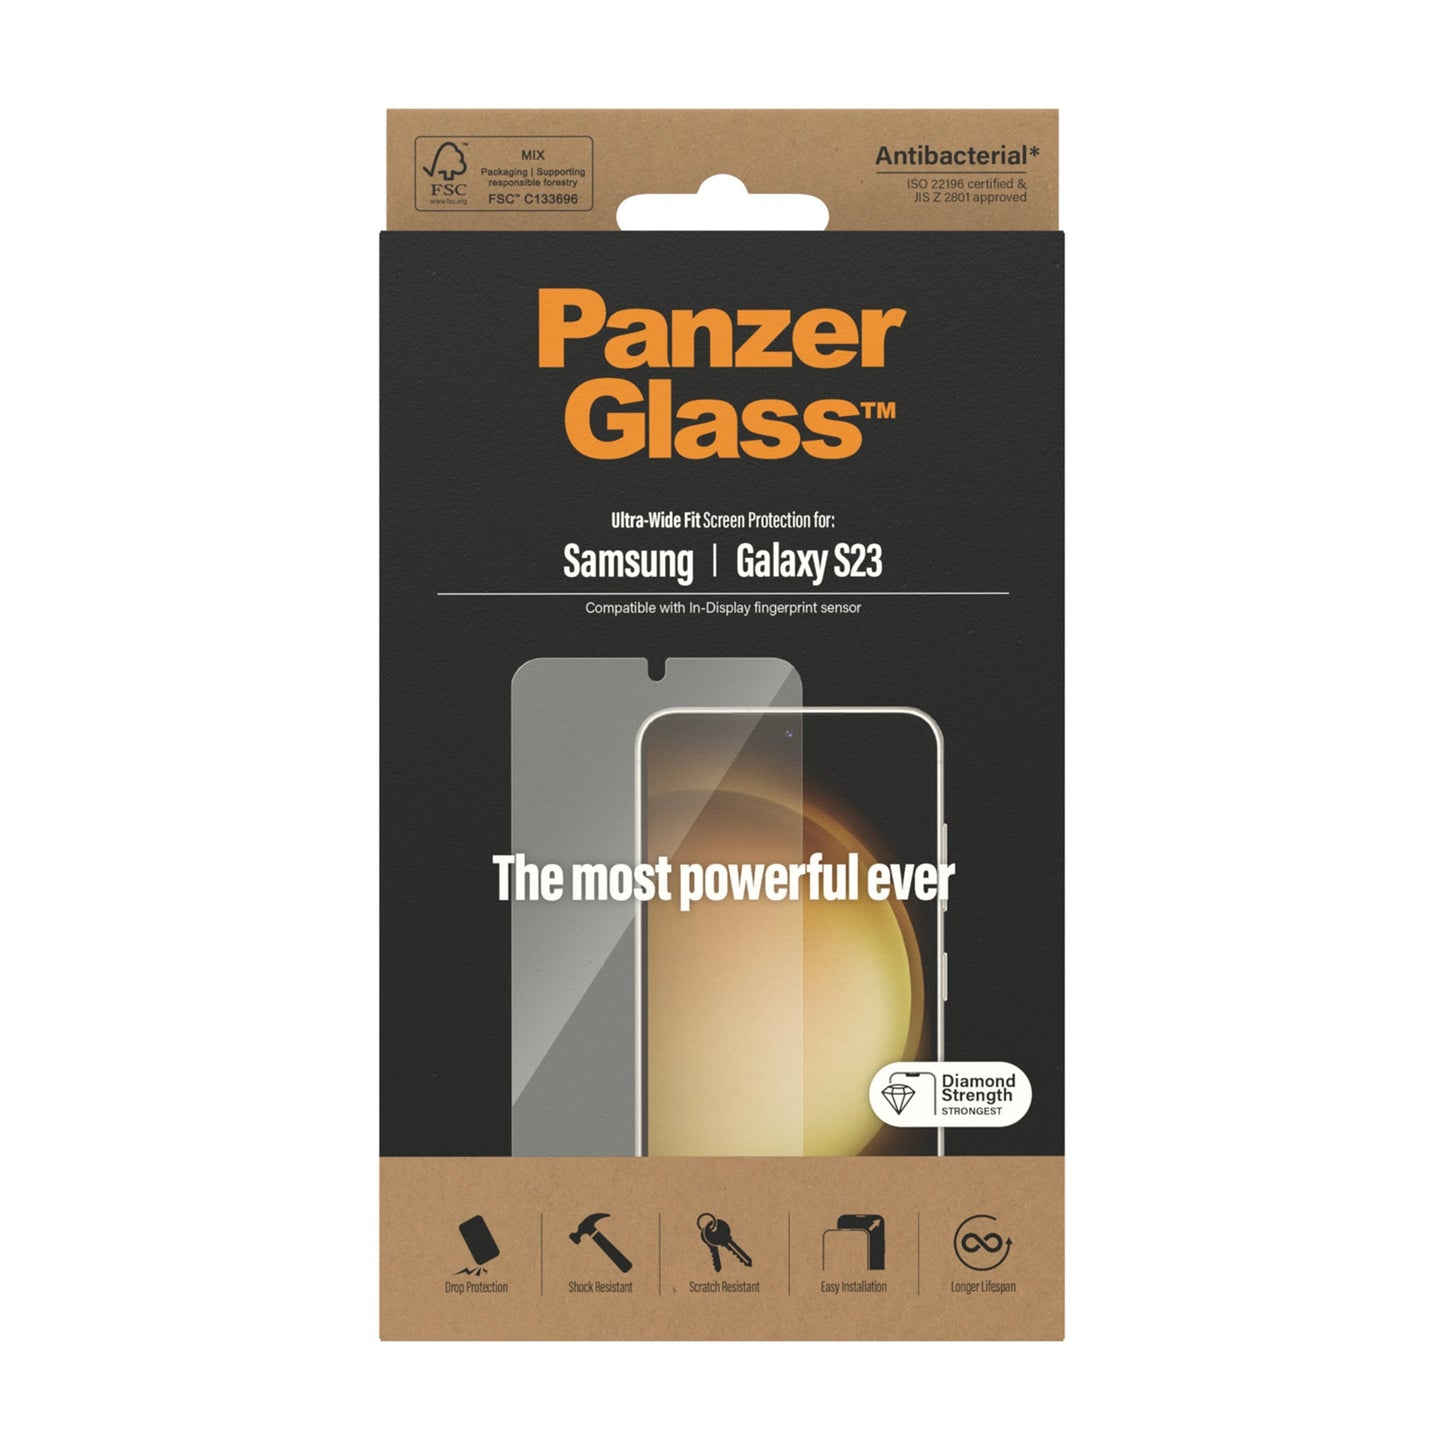 PanzerGlass® Screen Protector Samsung Galaxy S23 | Ultra-Wide Fit 3